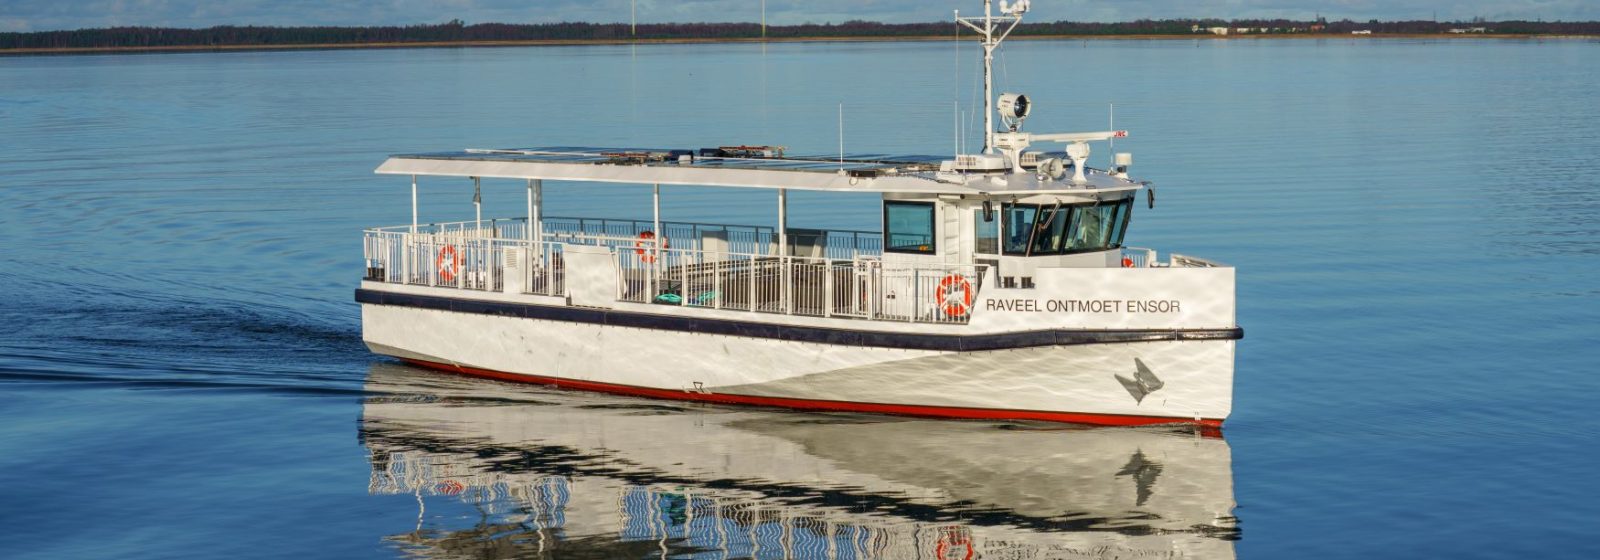 Veerboot 'Raveel ontmoet Ensor' voor Oostende